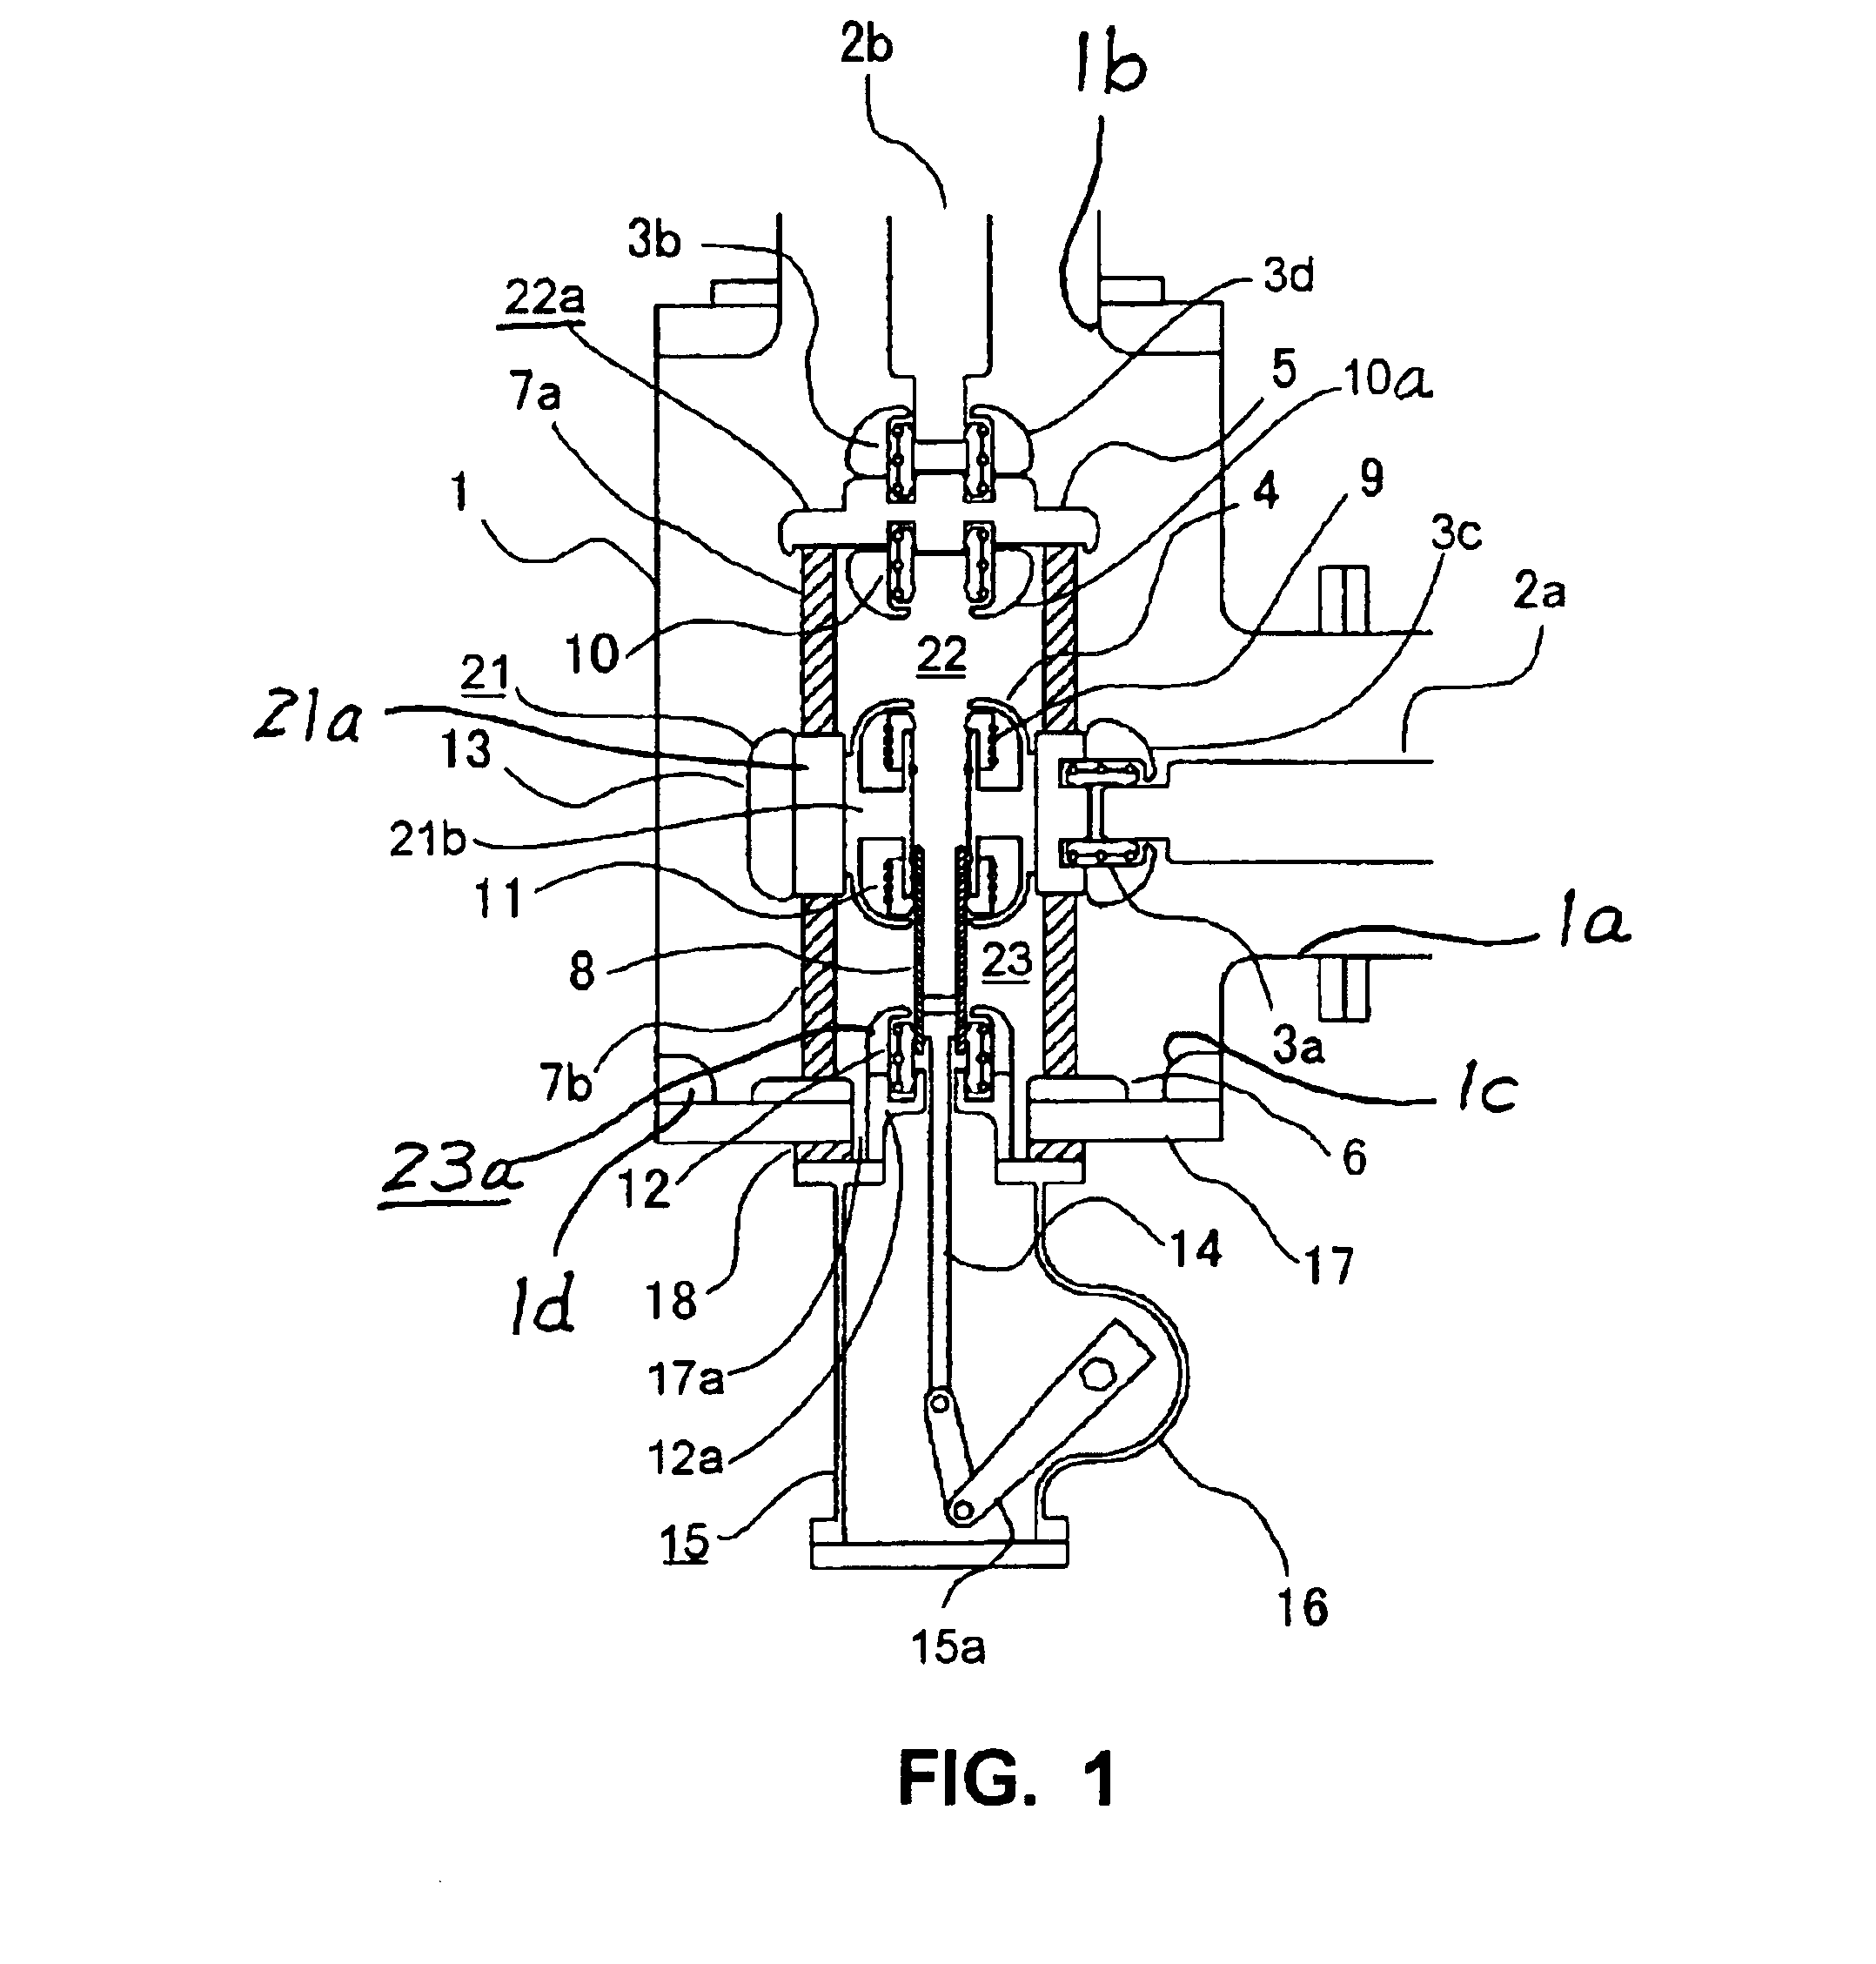 Gas-insulated switchgear